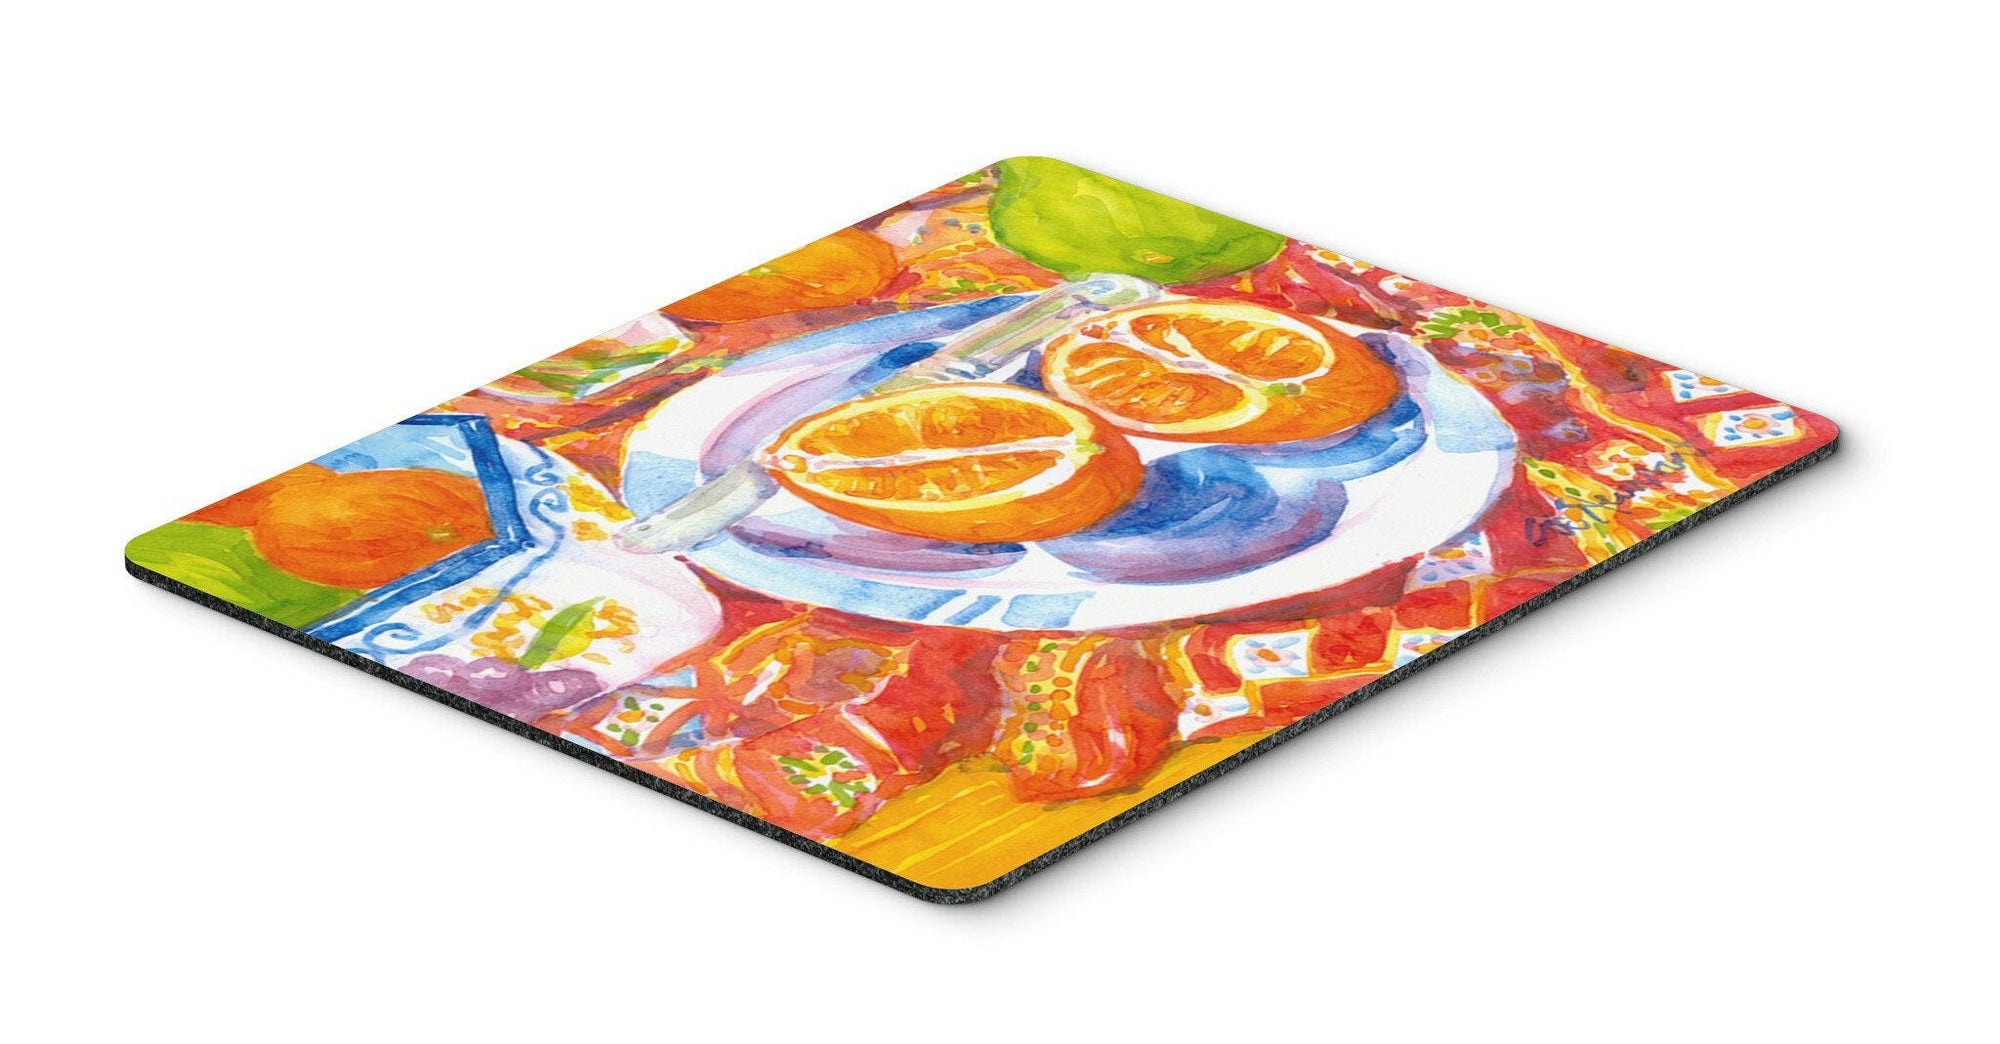 Florida Oranges Sliced for breakfast  Mouse pad, hot pad, or trivet by Caroline's Treasures